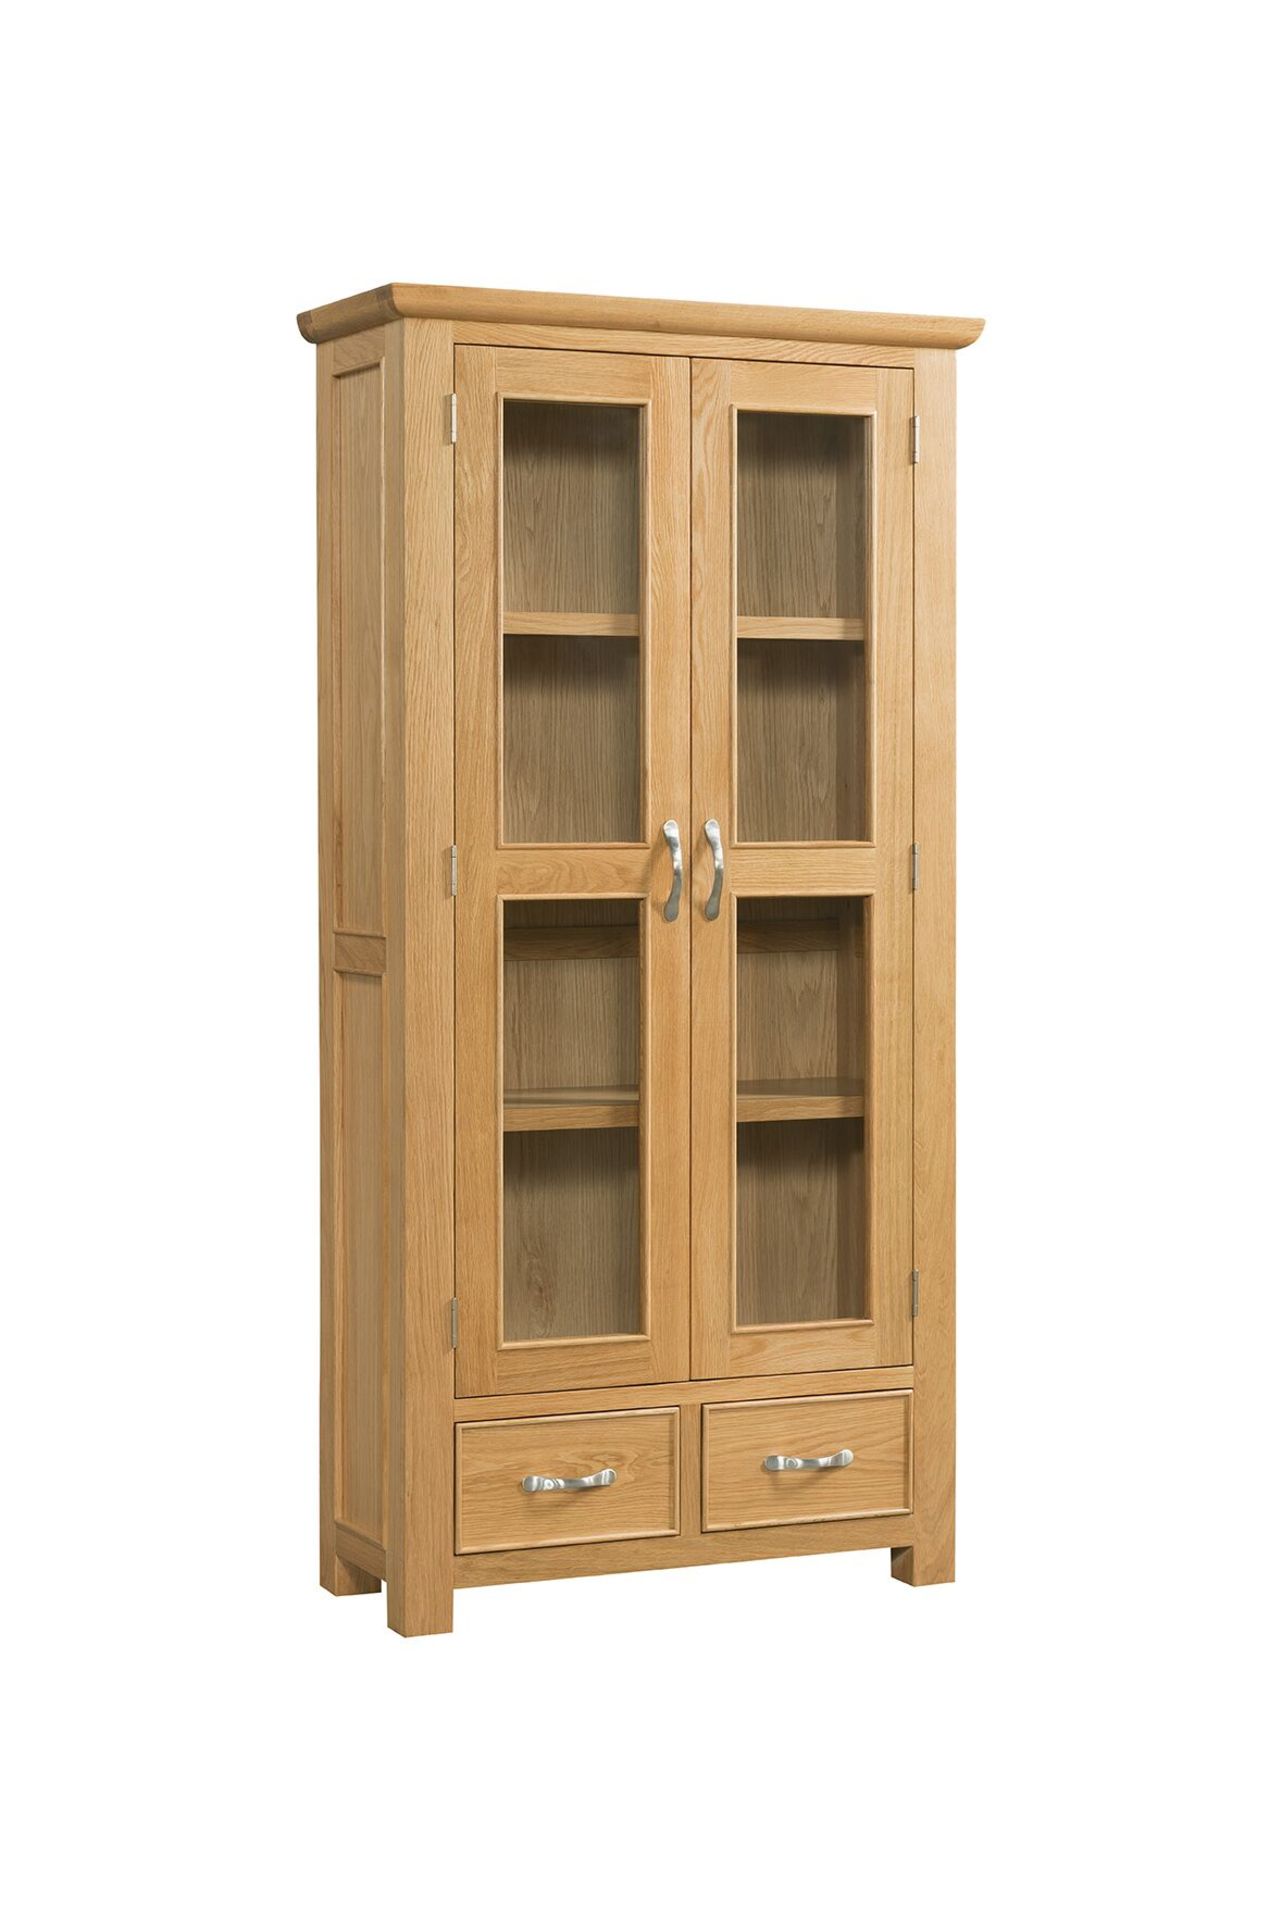 V Brand New Siena Display Cabinet 90 x 37 x 180 cms RRP559.00 (Devonshirepineandoak.co.uk) - item is